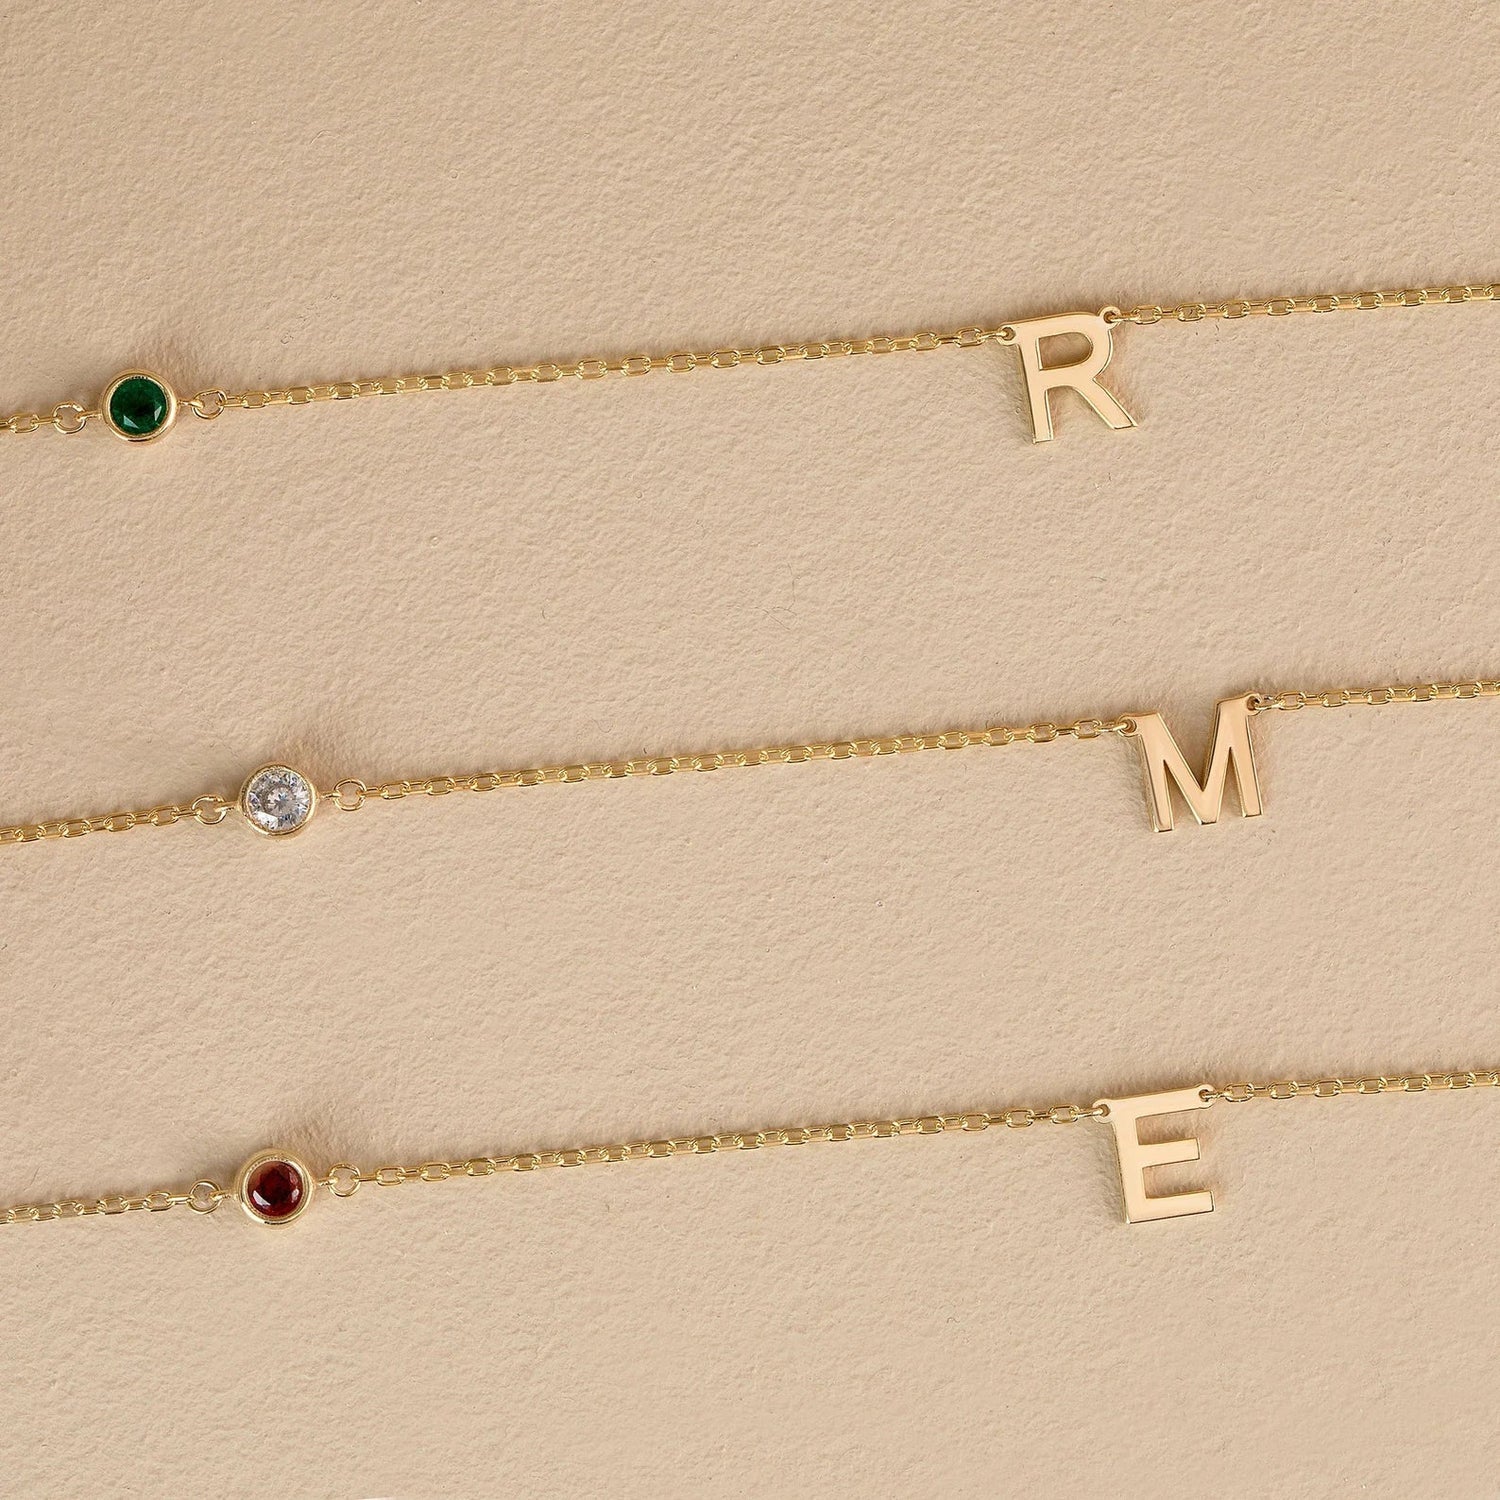 English Alphabet Necklaces